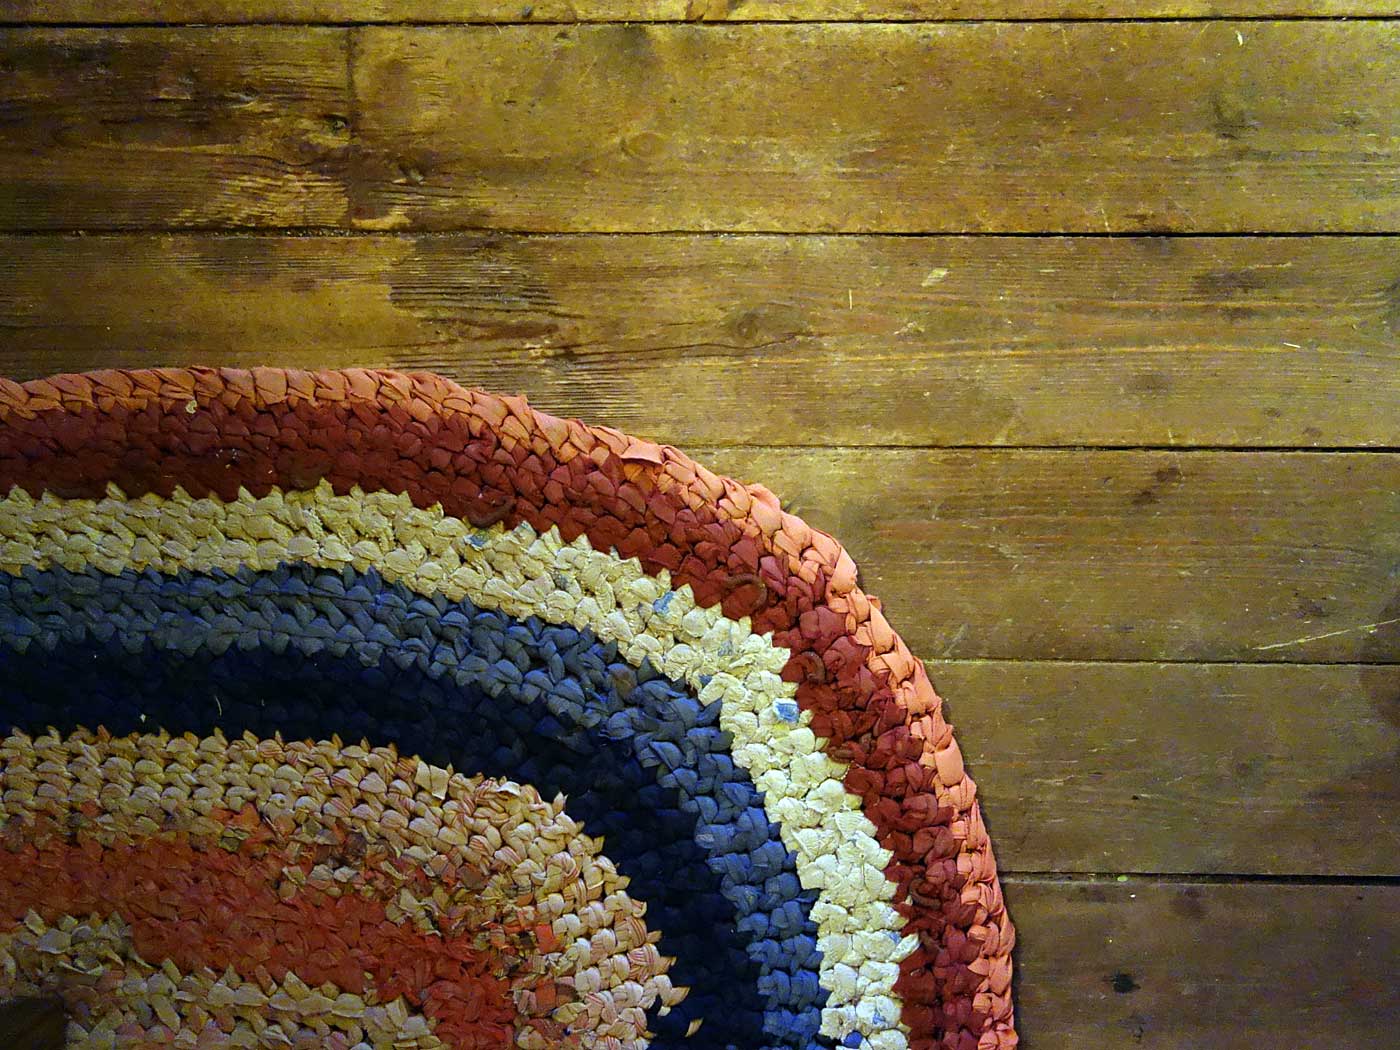 Djúpavík. Miscellaneous LXVI. - 'Carpet' and wooden floor during the concert. (12 till 18 August 2013)